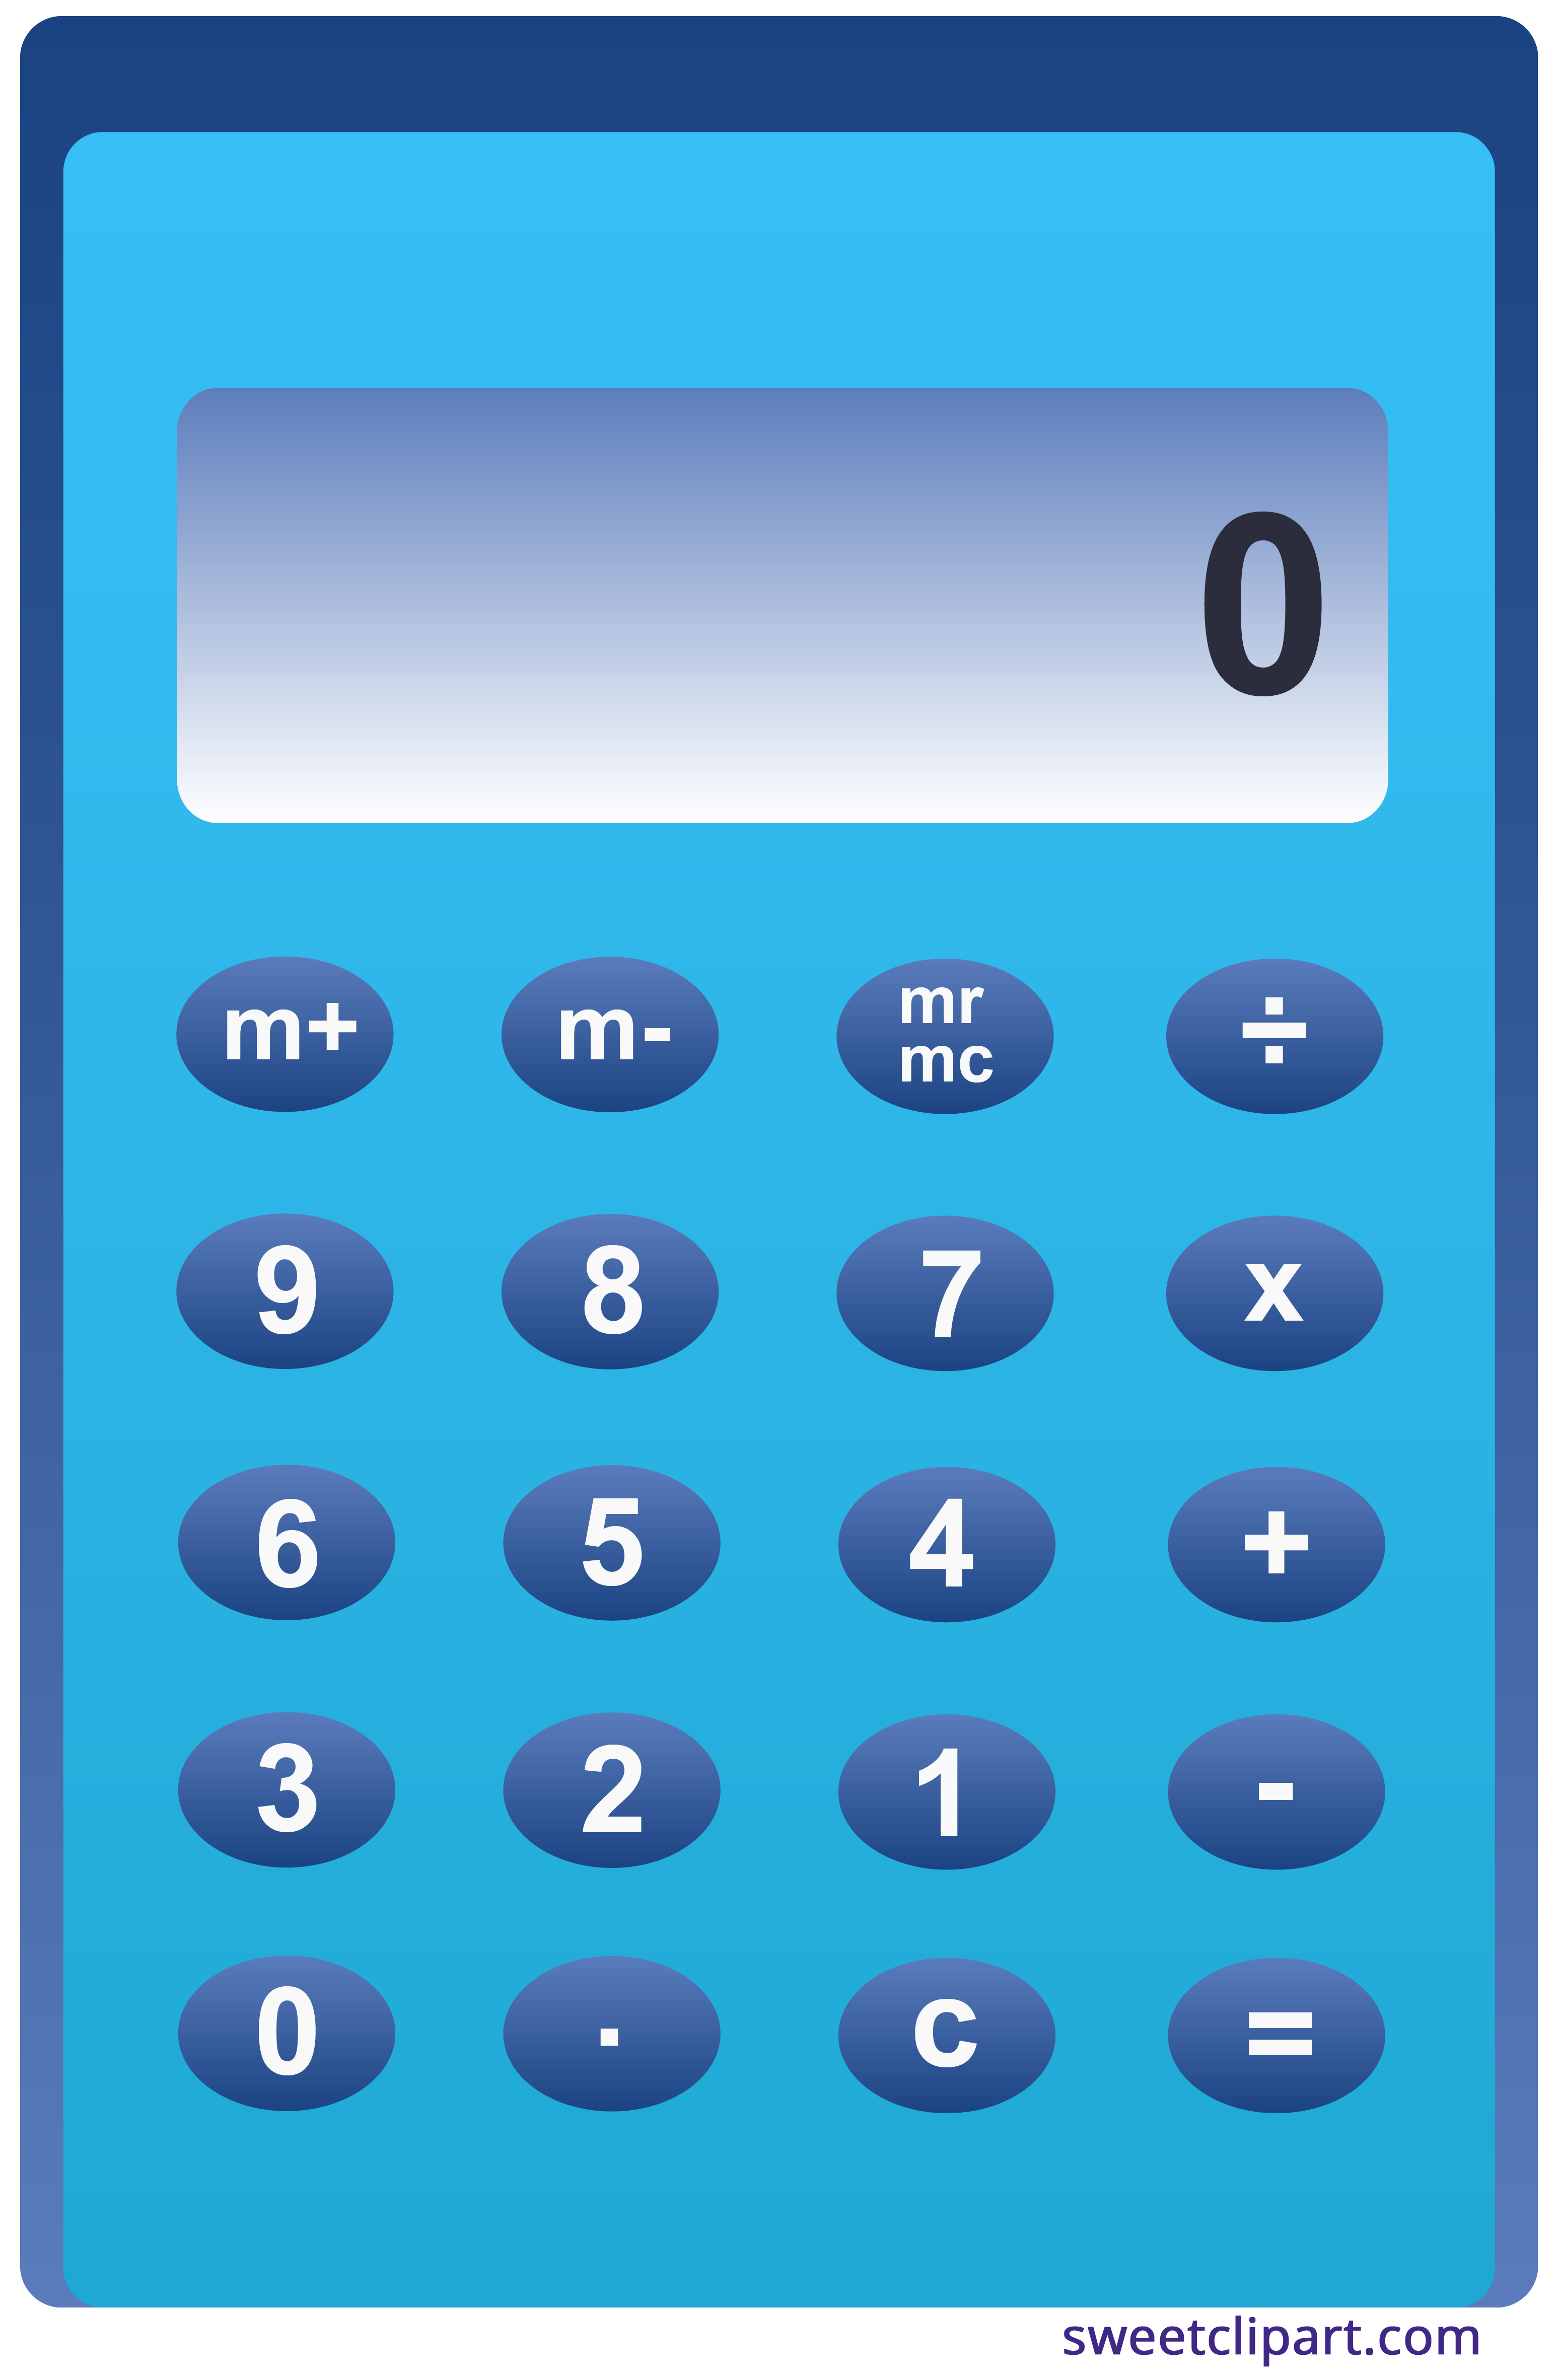 calculator clipart